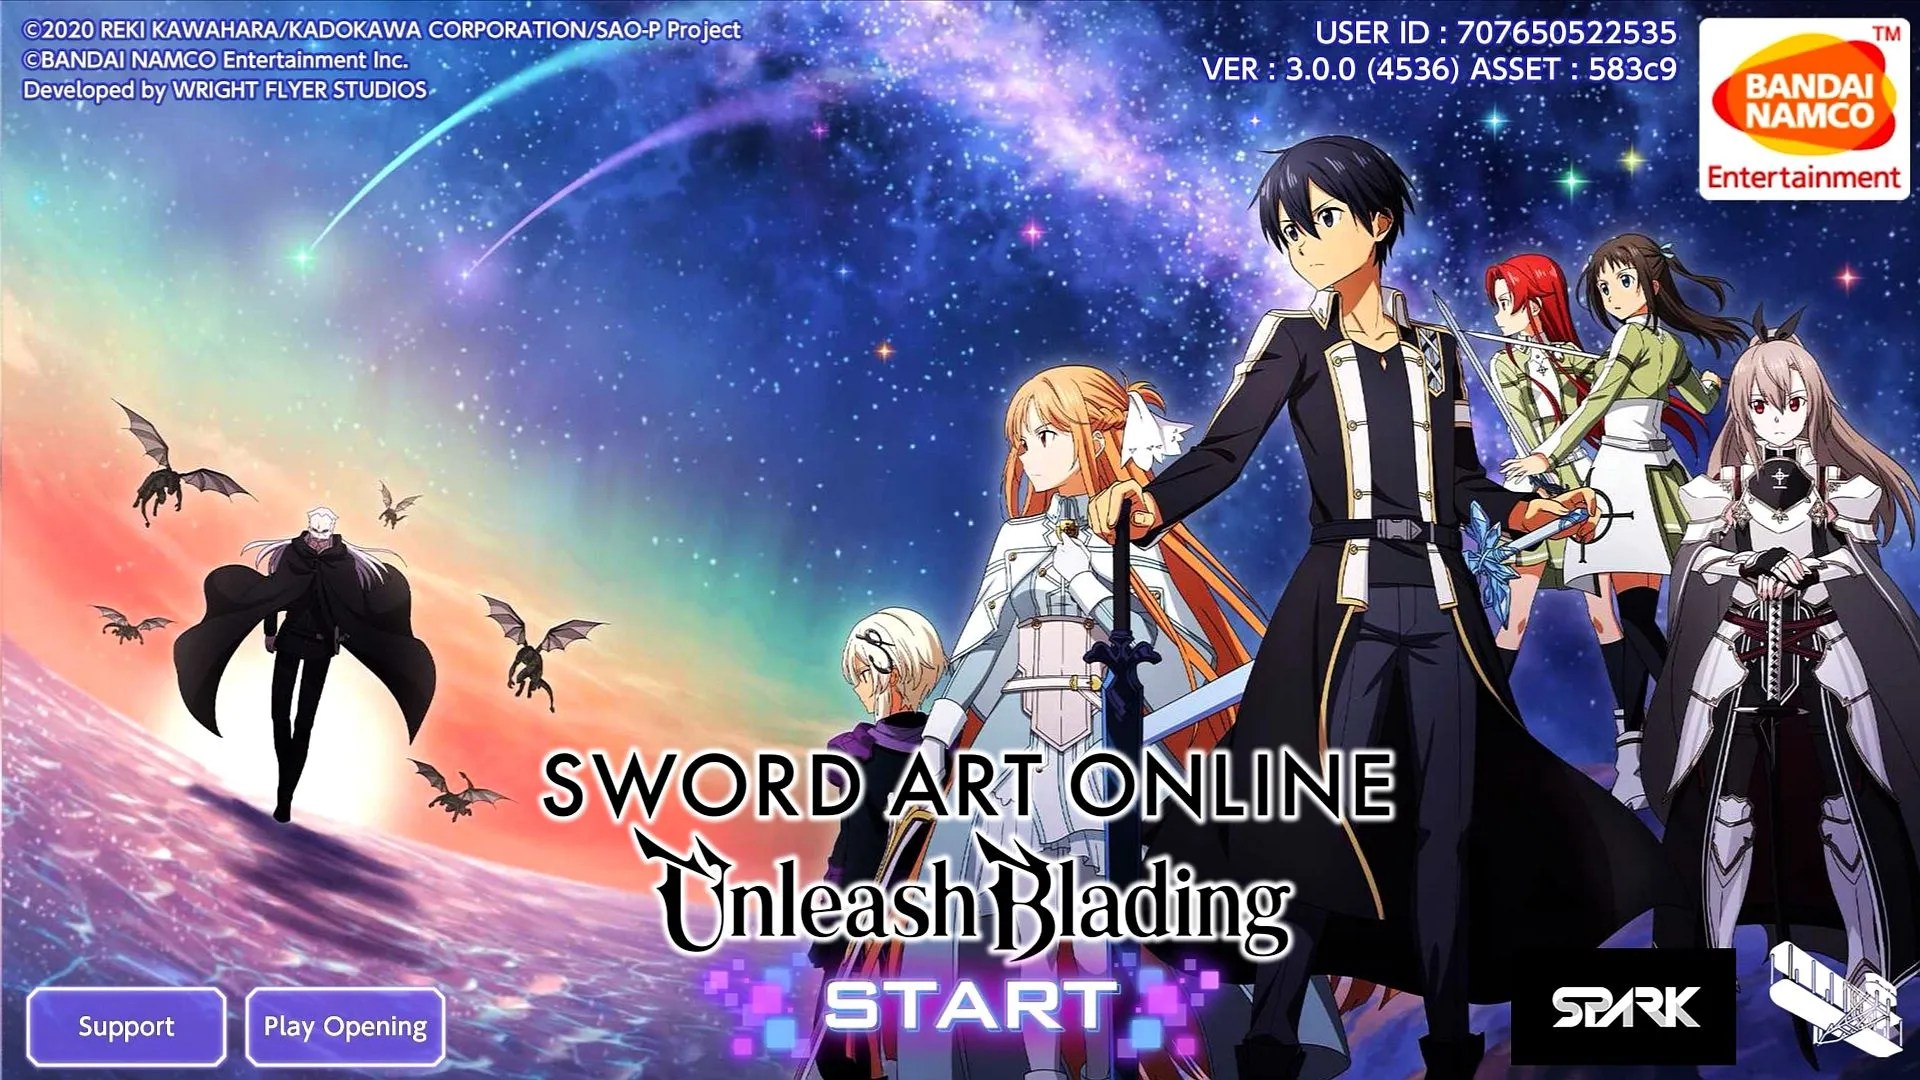 Sword Art Online Unleash Blading Shuts Down on January 16 - QooApp